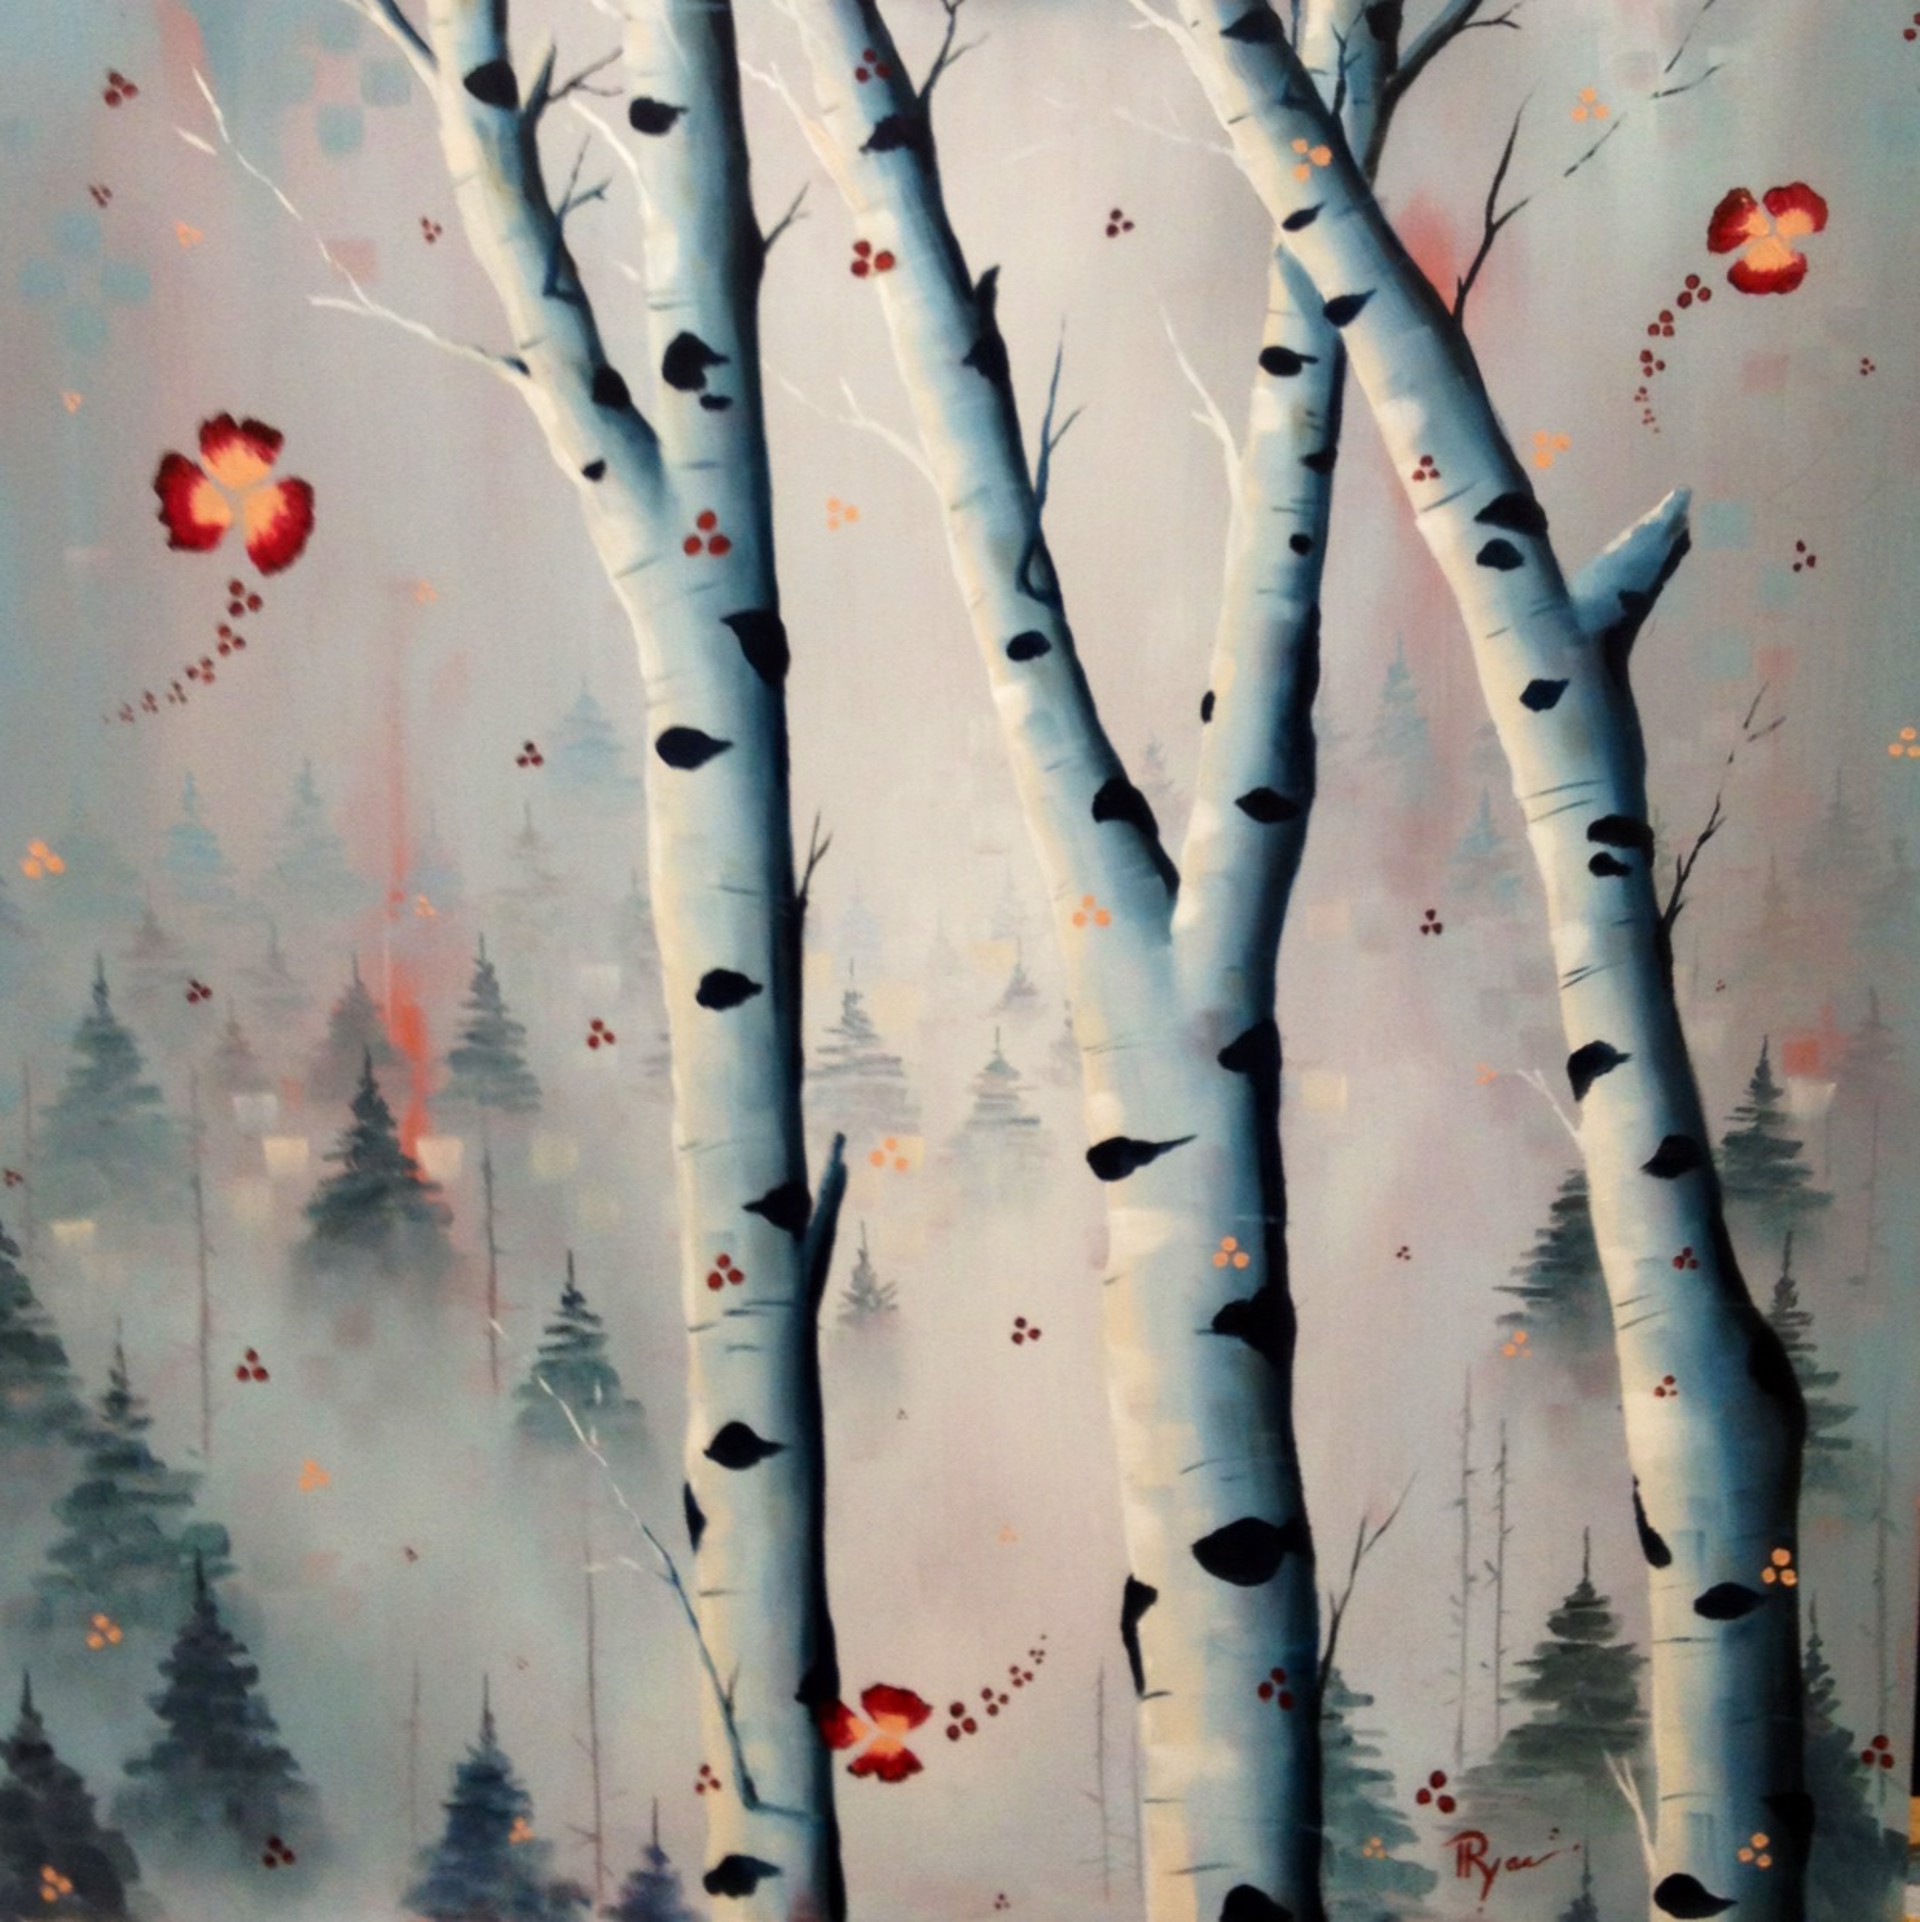 Vanishing Pines Landscape by Daniel Ryan